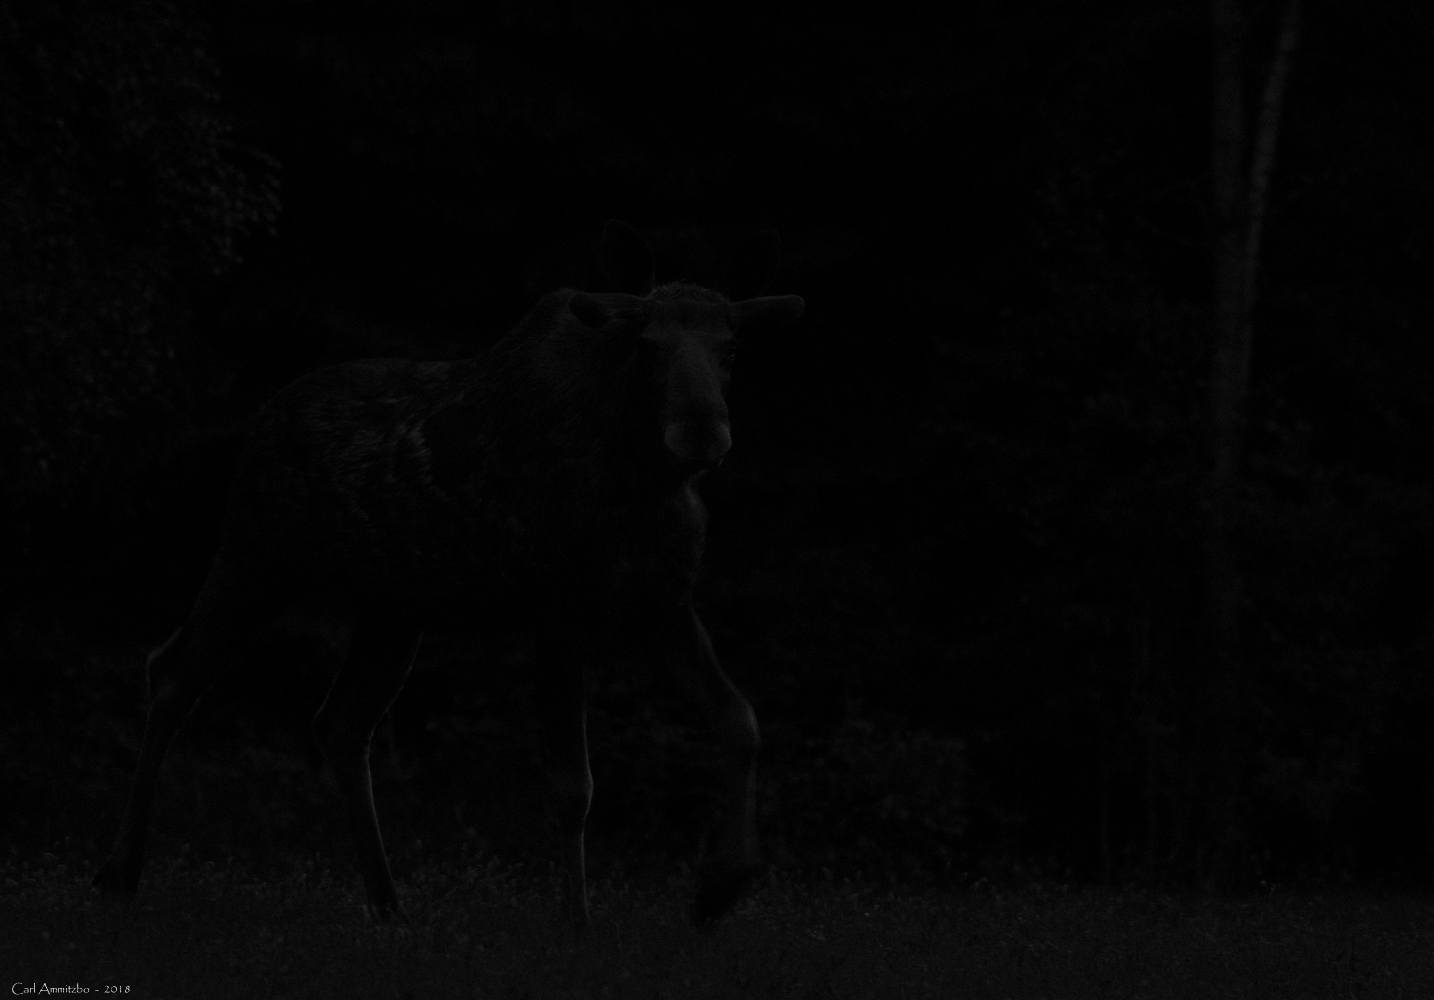 03 - 0522 - Elg i mørket - 02 - Bergslagen